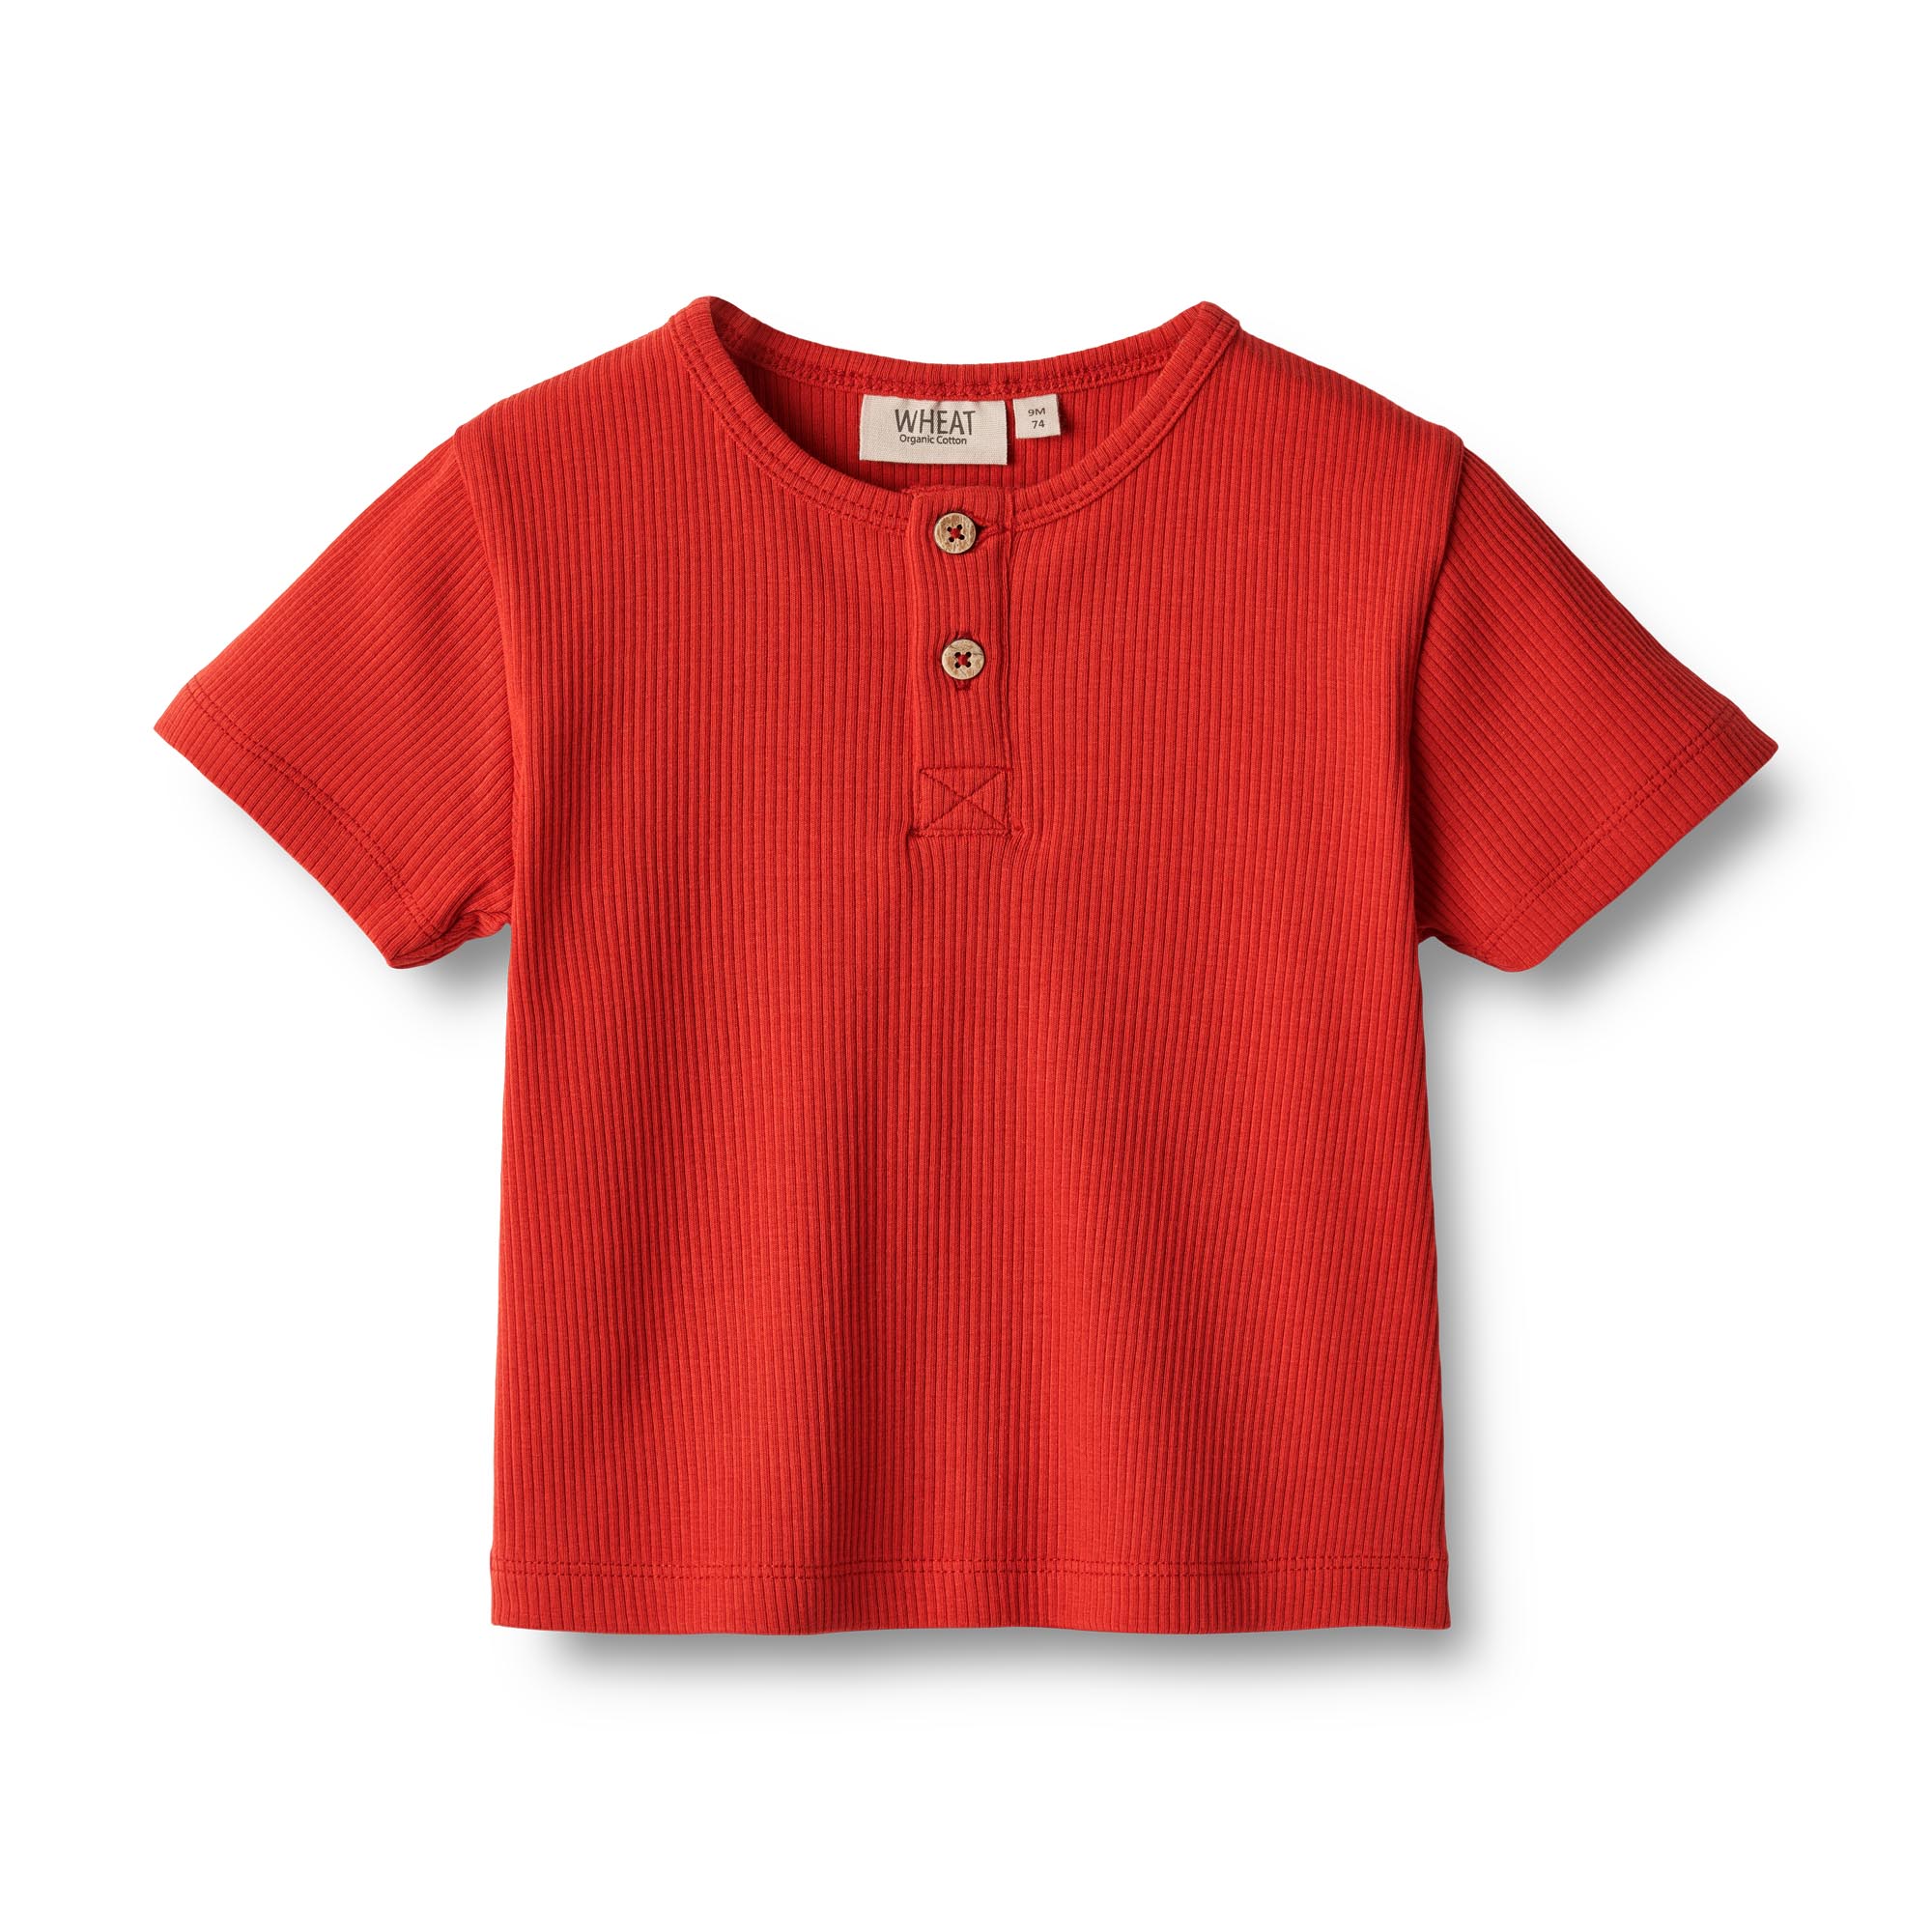 Jeff&Joy-Wheat-T-Shirt-S-S-Lumi-2072-red